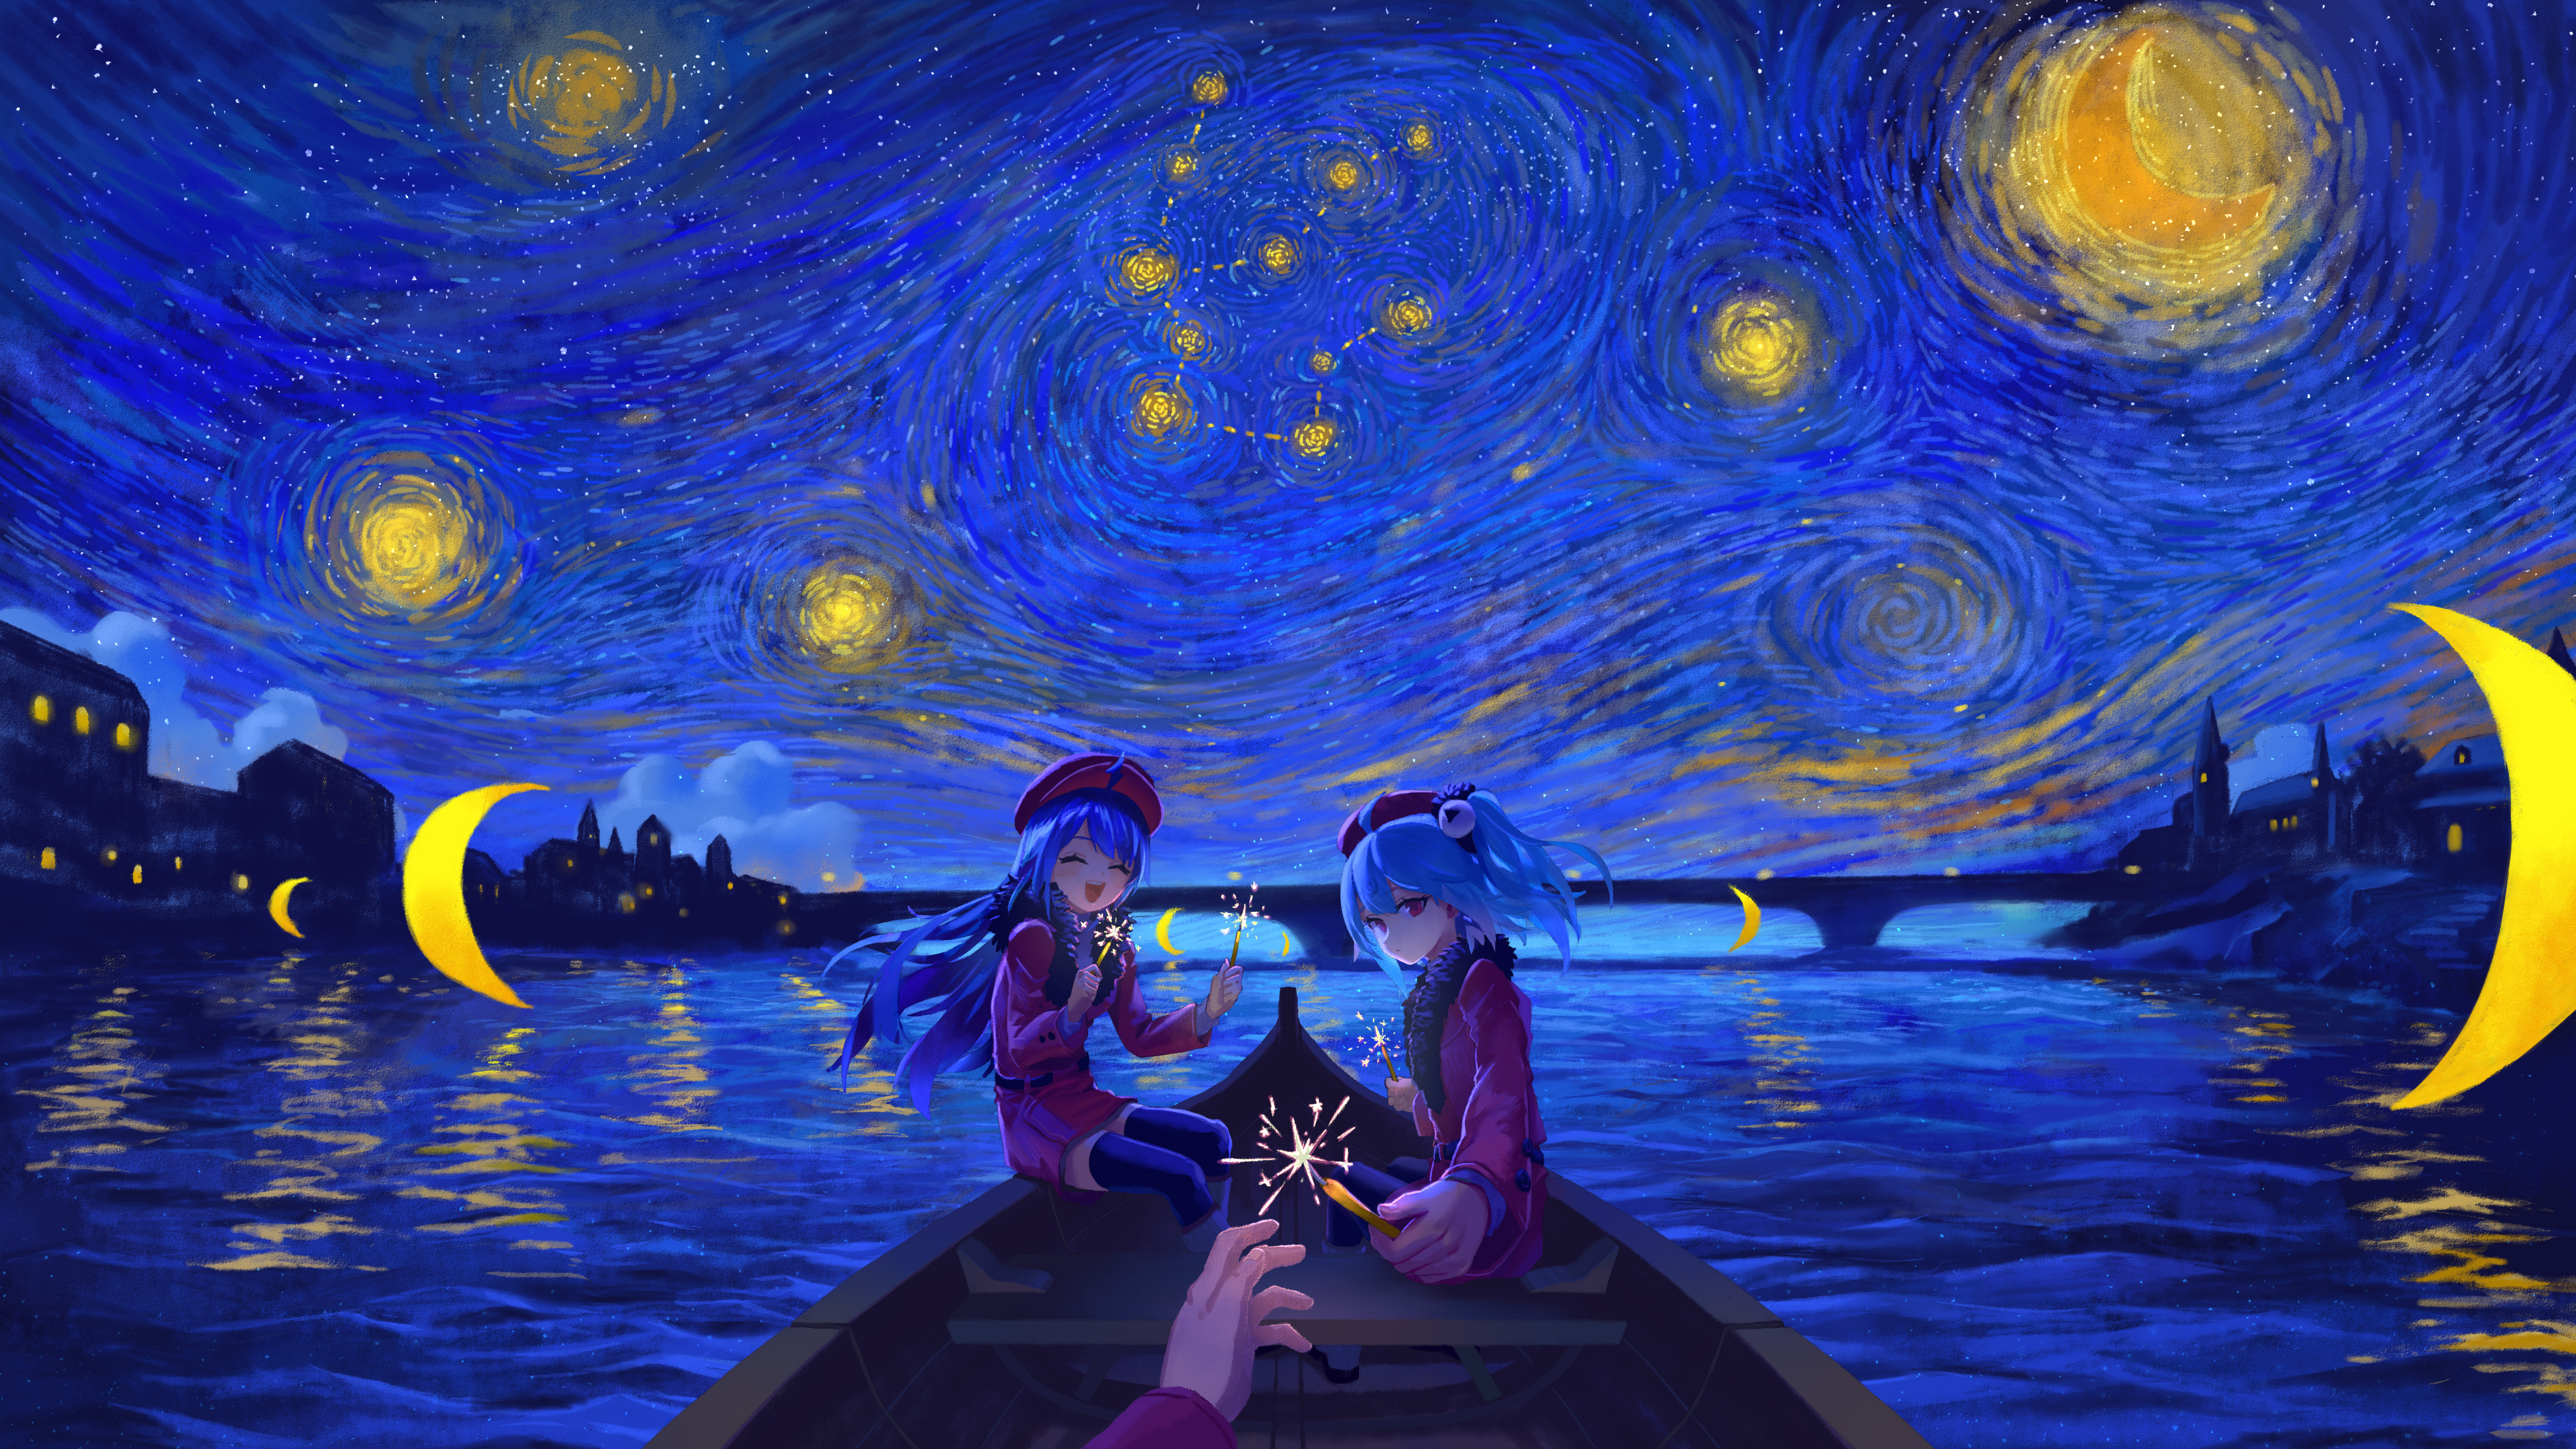 Bilibili Anime Girls Anime Sky Colorful Two Women Outdoors River Boat Vehicle Night Stars Blue Hair  4551x2560